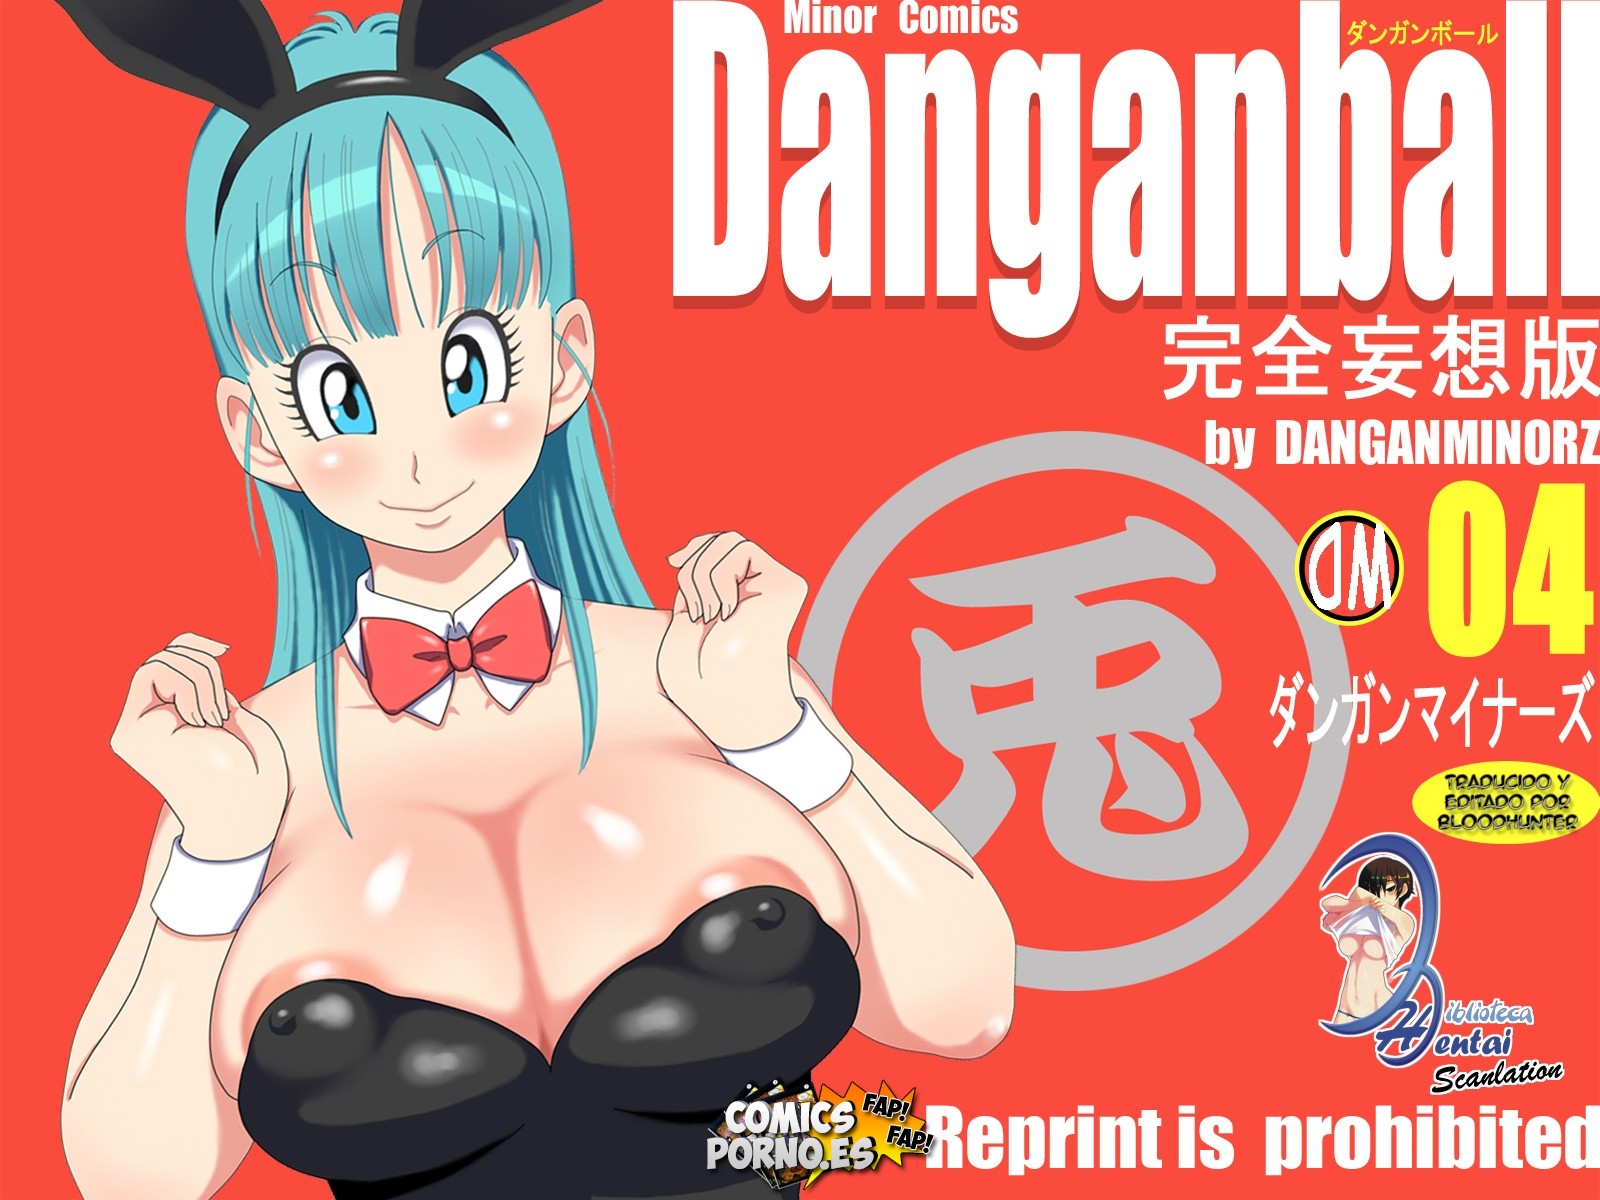 Dragon Ball Z Dangan Porn All - Dangan Ball 4 [DBZ Hentai] - Ver Comics Porno XXX en EspaÃ±ol